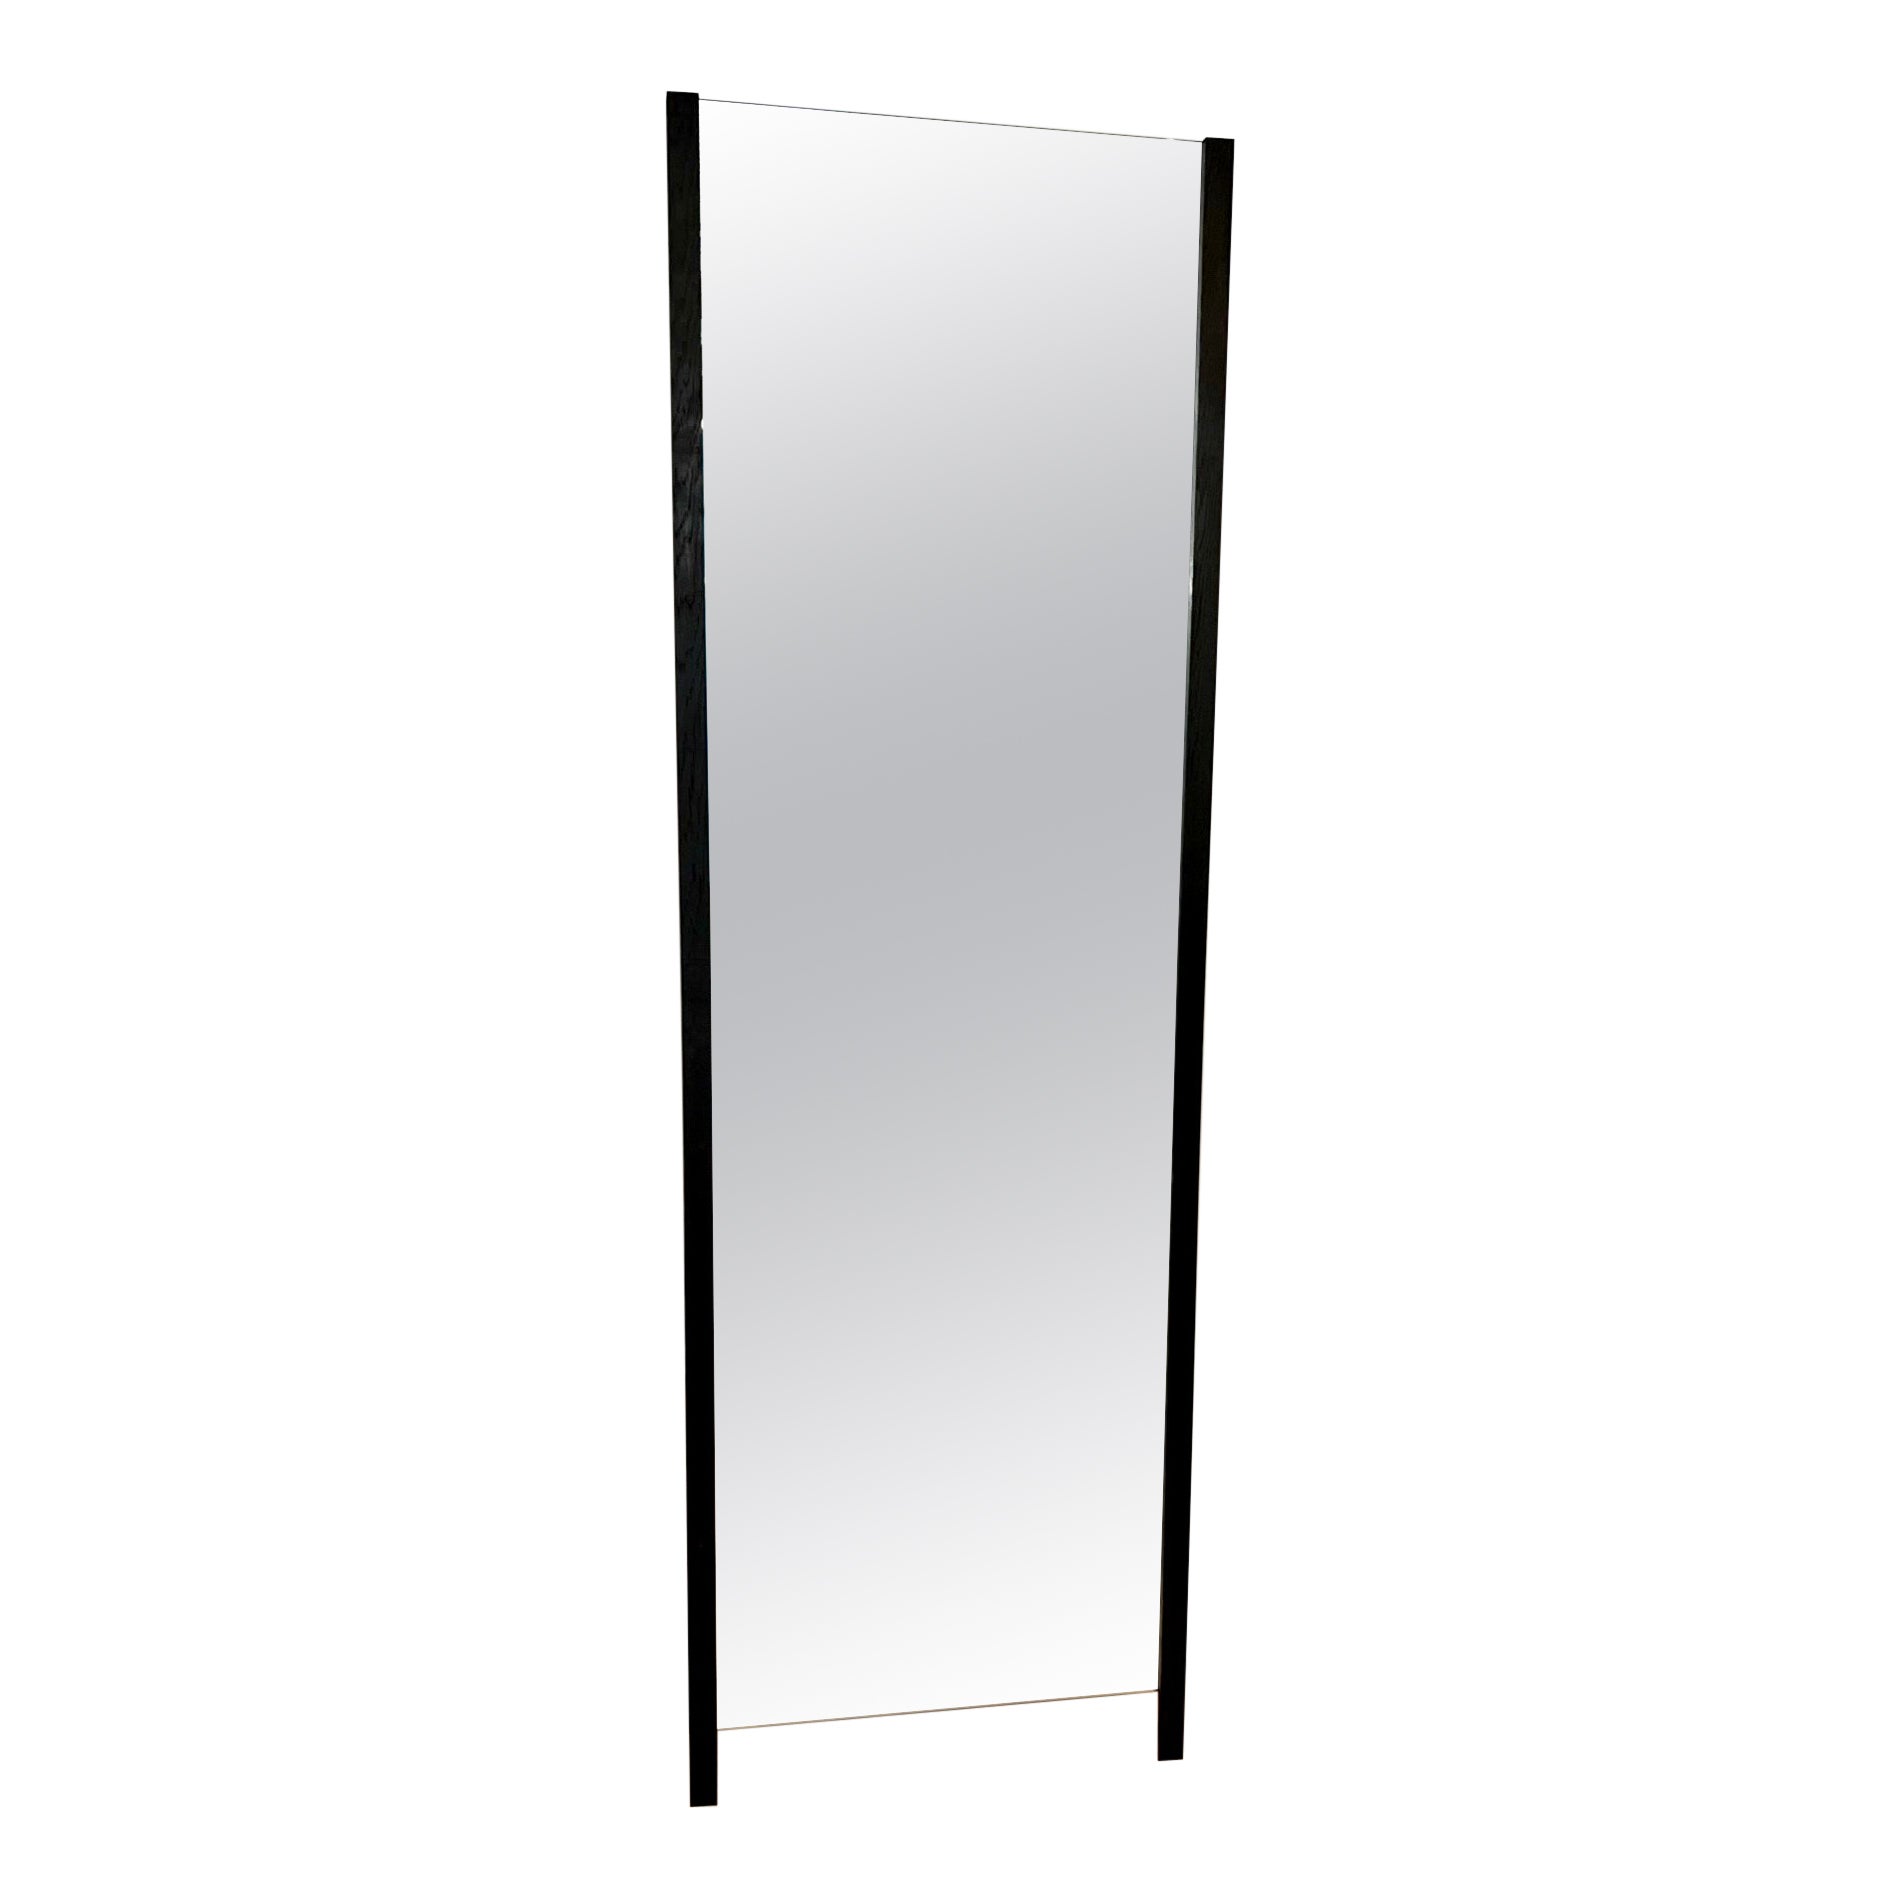 Crura Mirror Large Format Minimal Floor Standing Mirror For Sale